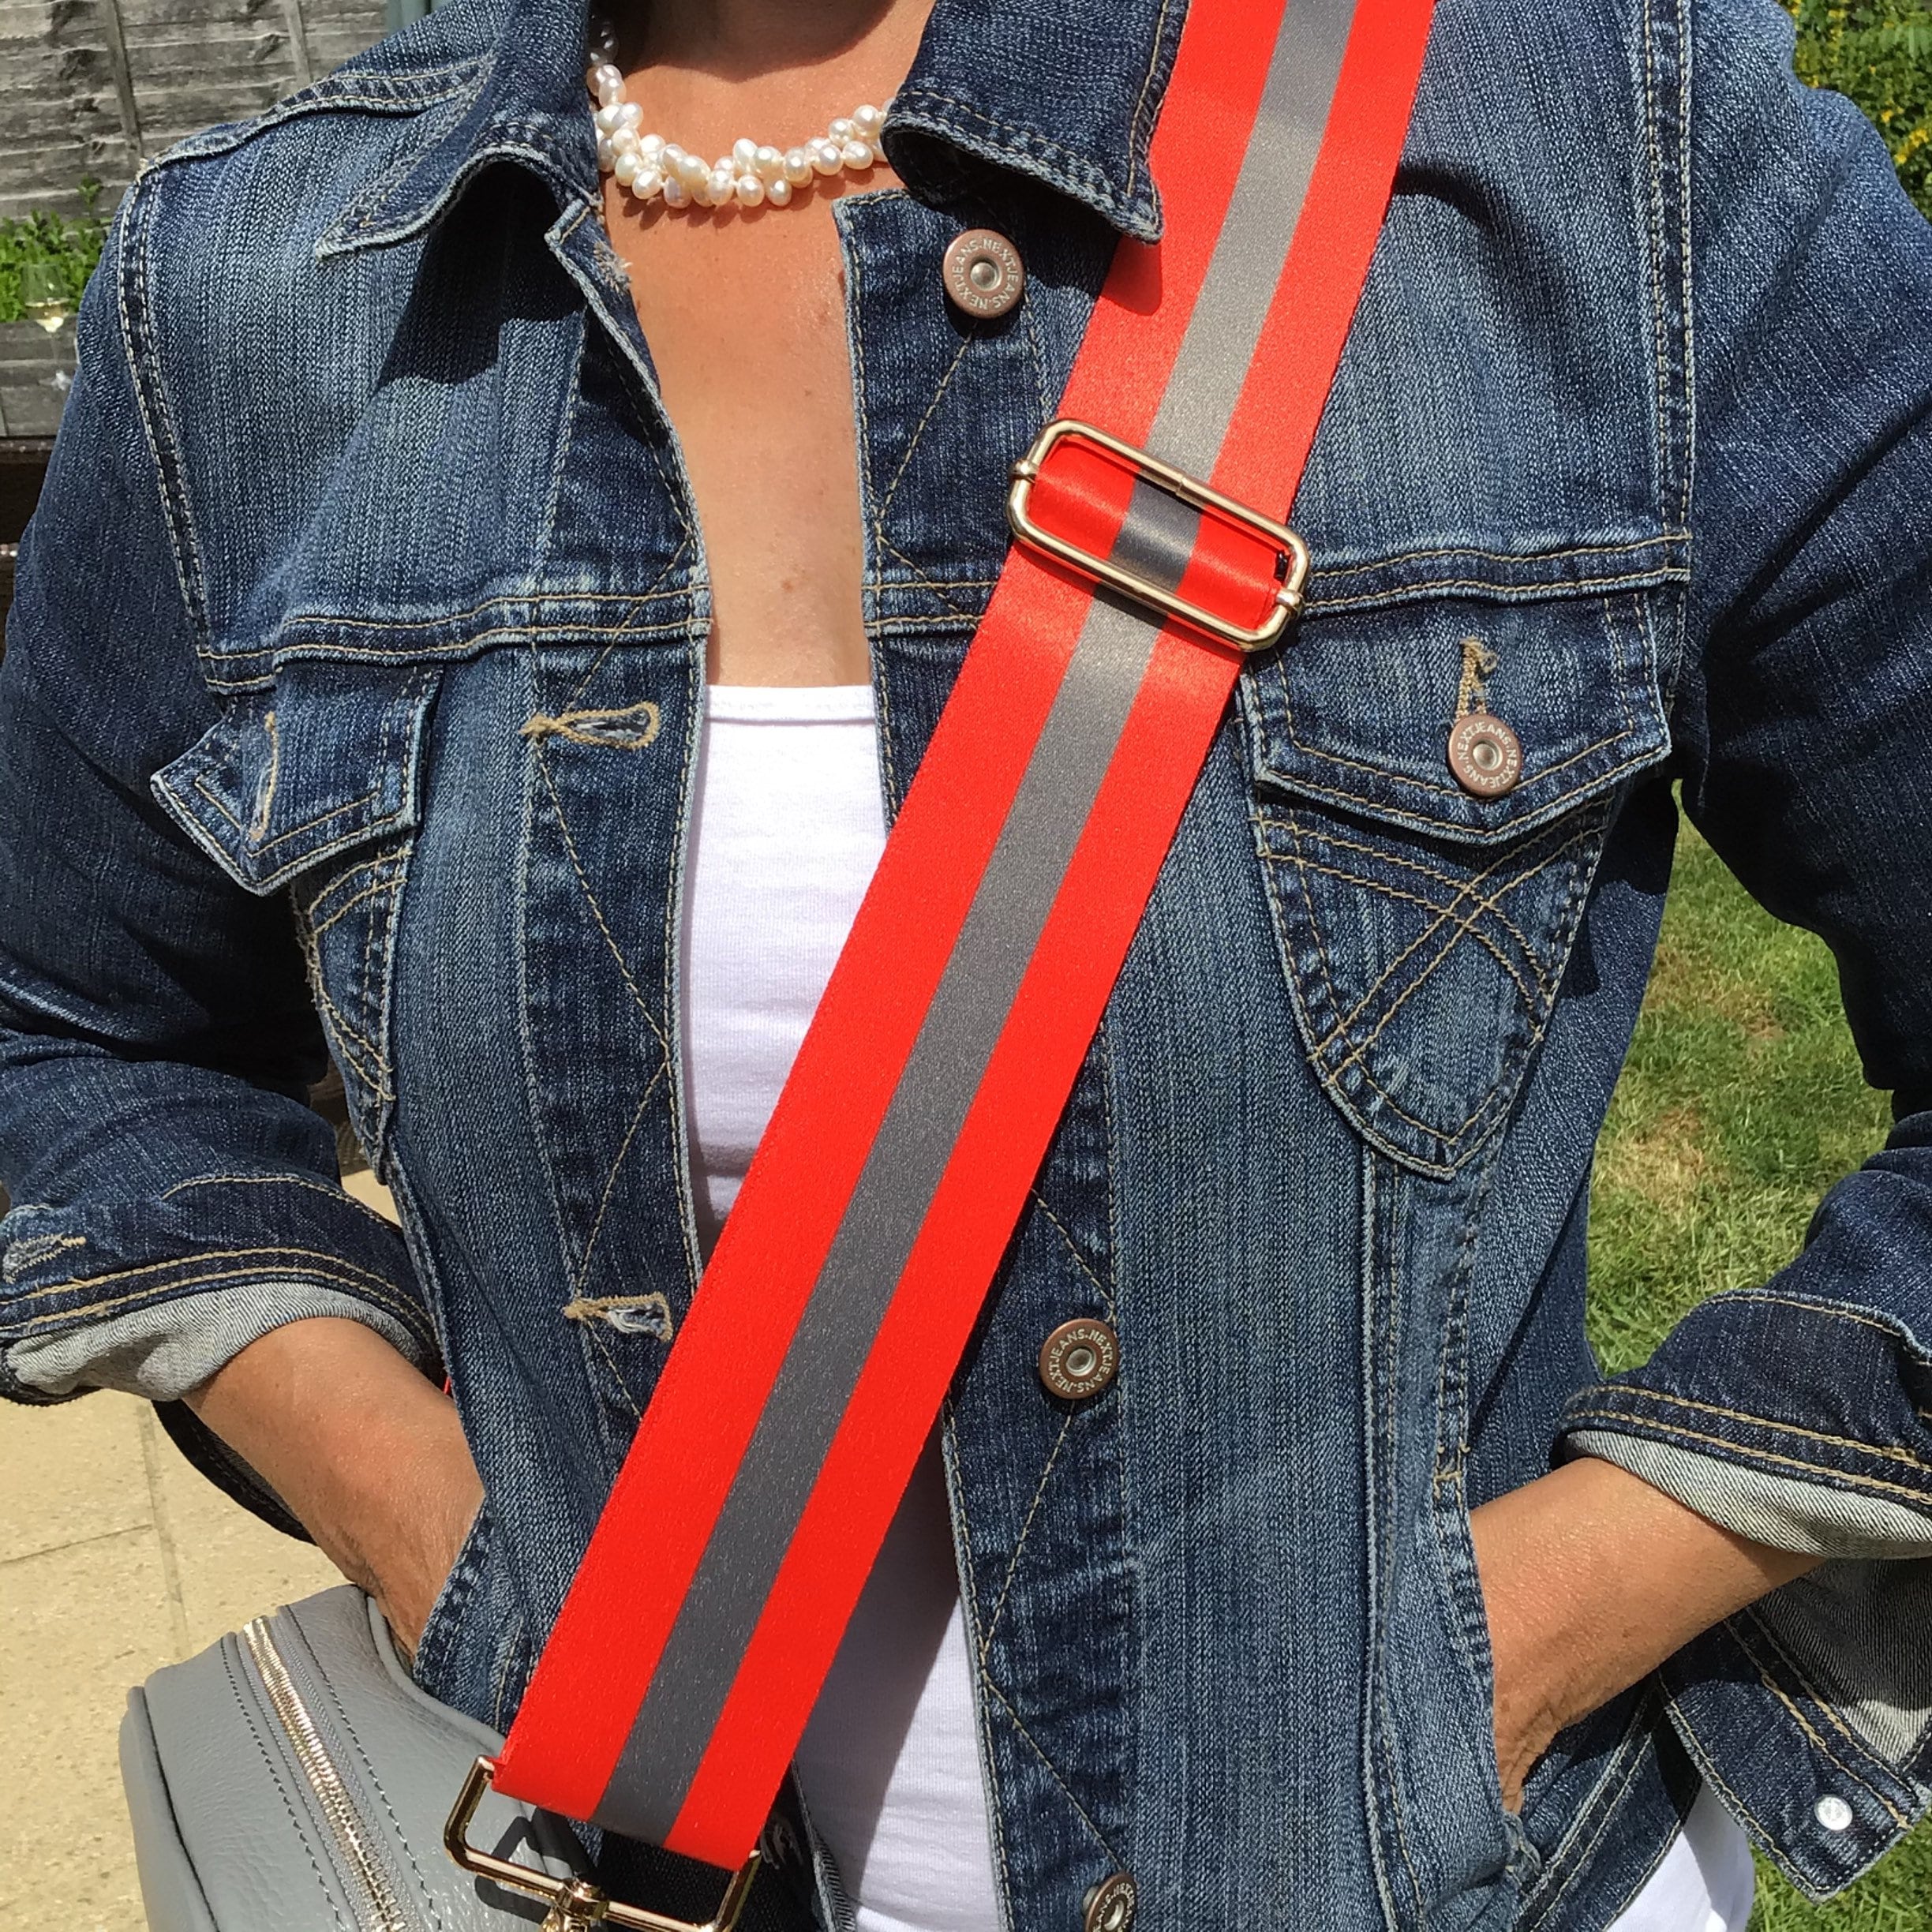 Crossbody Belt Webbing Strap in Red/Navy